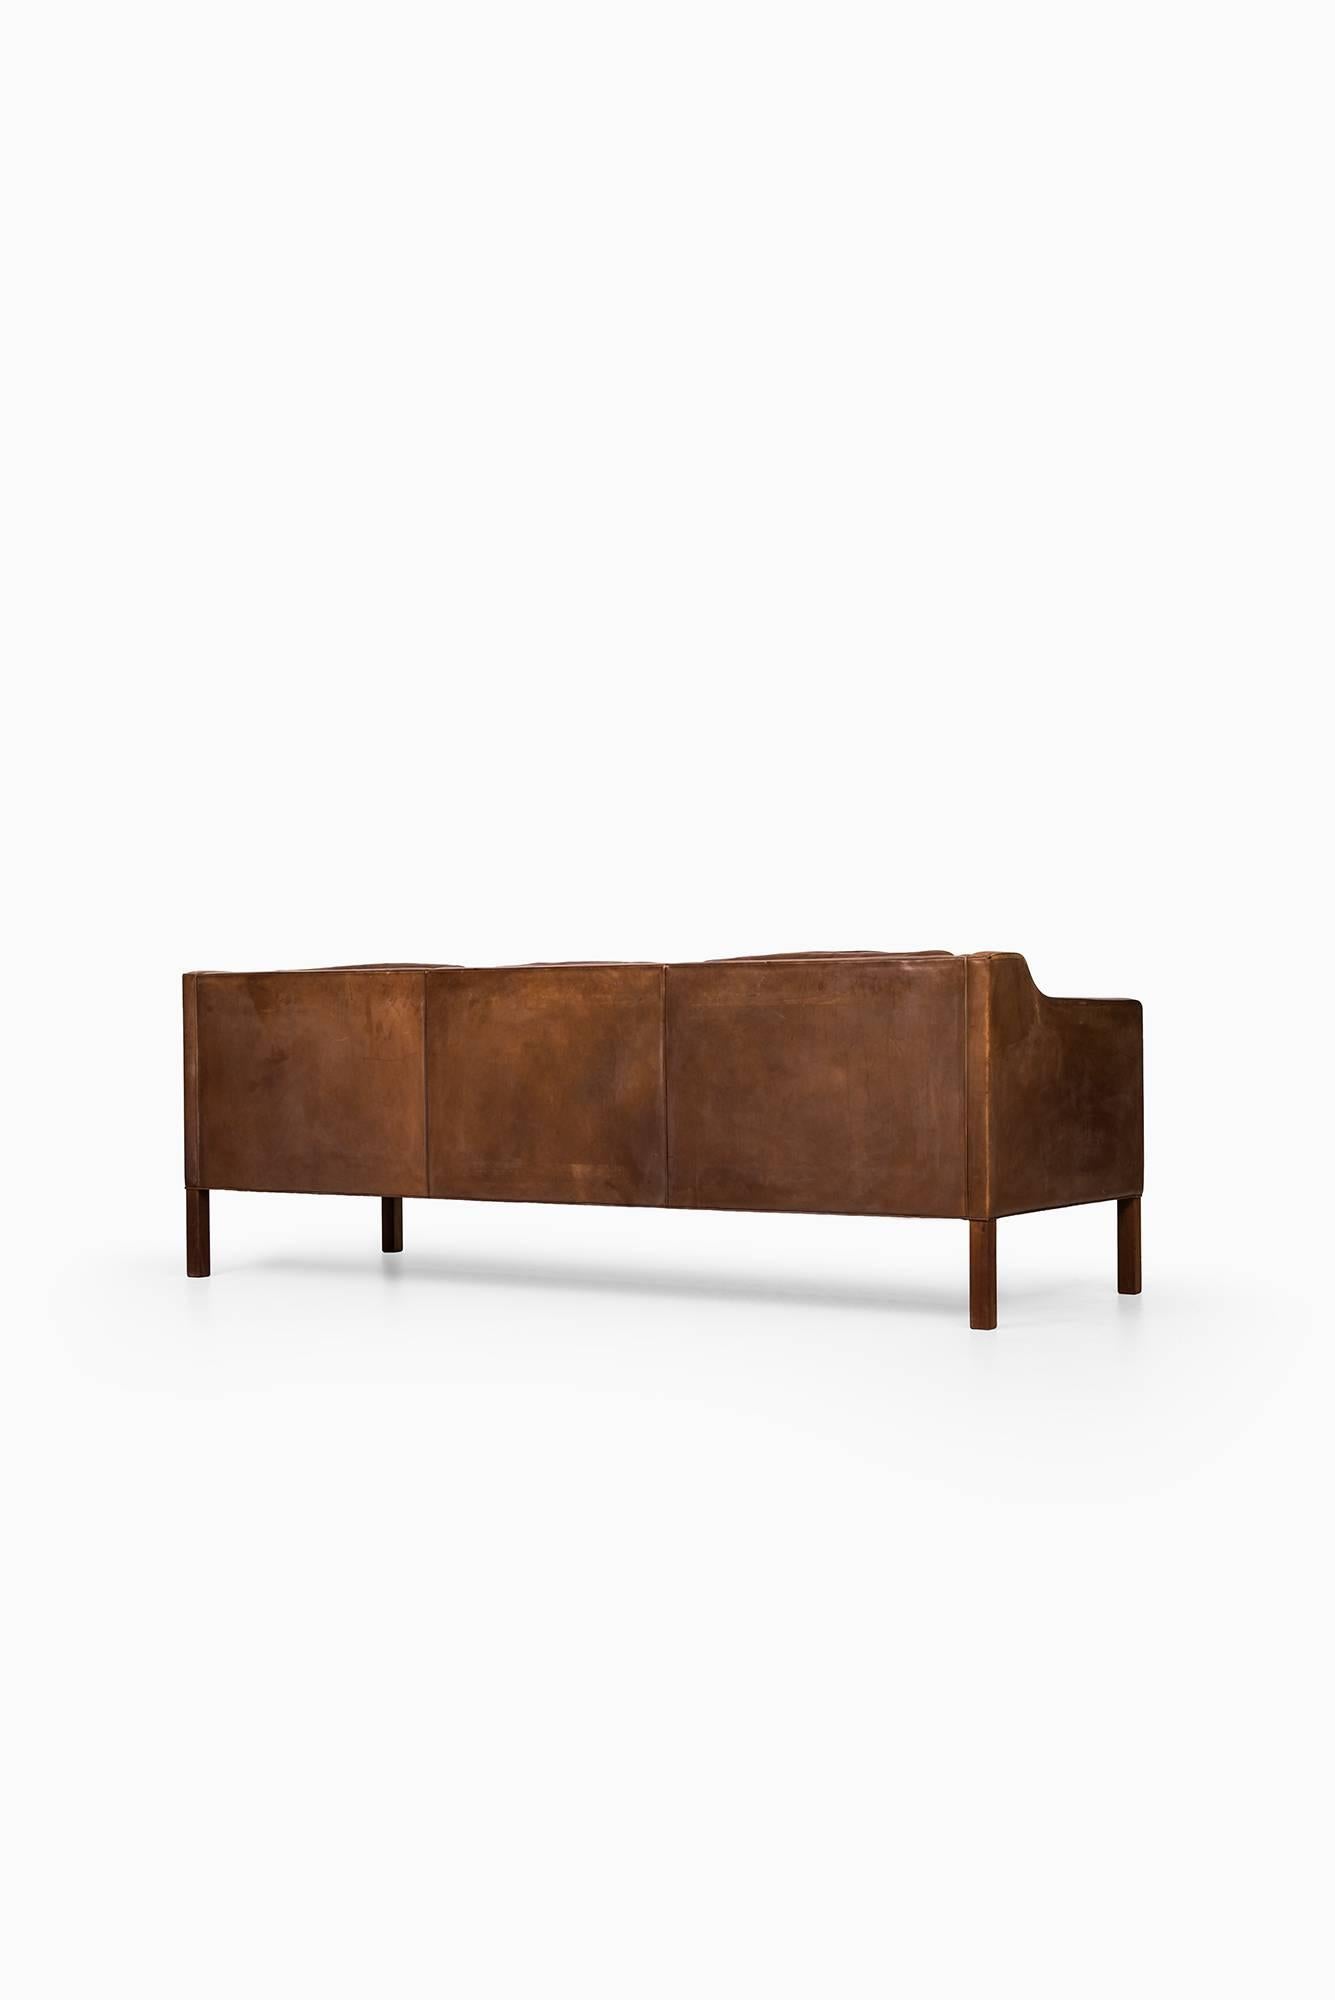 Leather Børge Mogensen Sofa Model 2213 by Fredericia Stolefabrik in Denmark